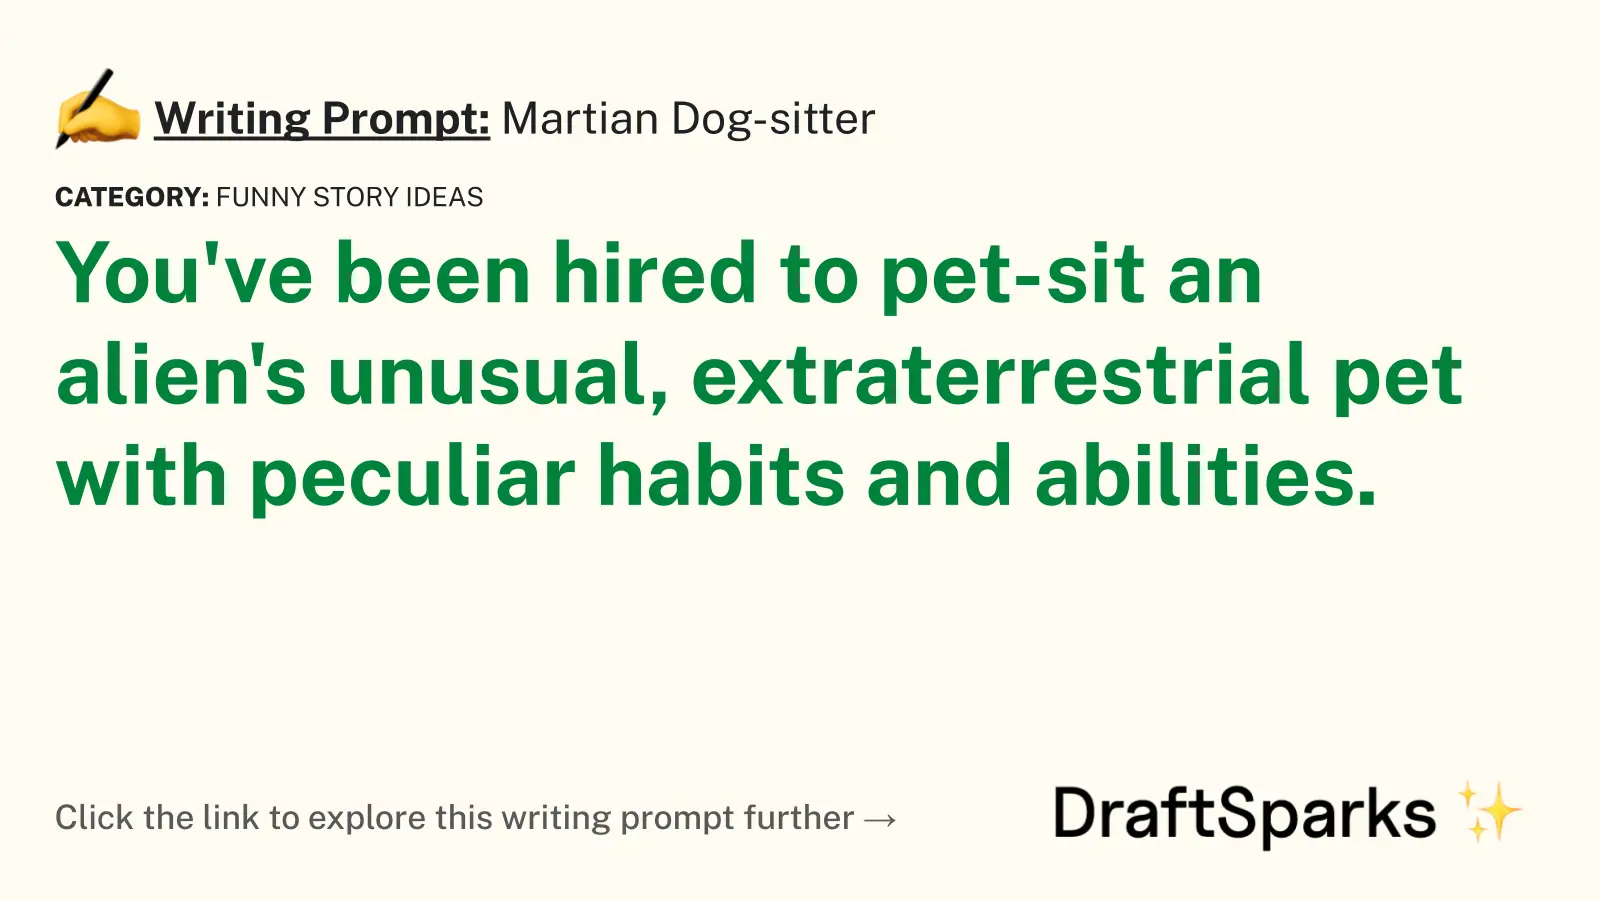 Martian Dog-sitter